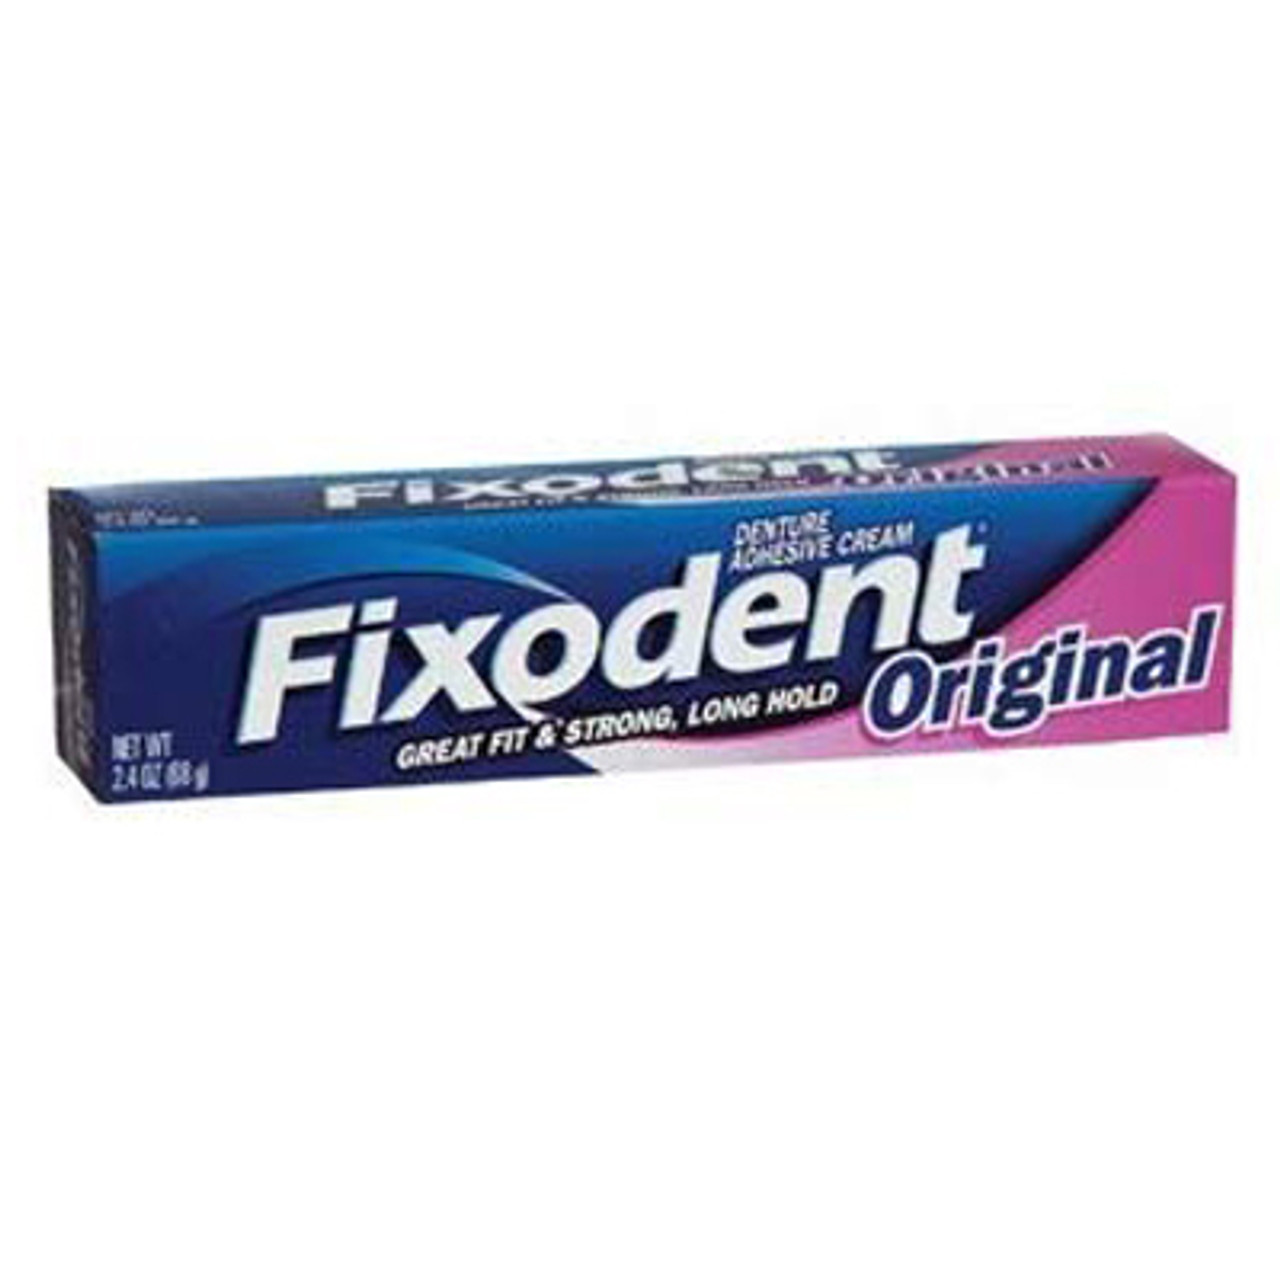 Fixodent Complete Denture Adhesive Cream, Original, 2.4 oz Tubes, 24/Case -  Dental Wholesale Direct